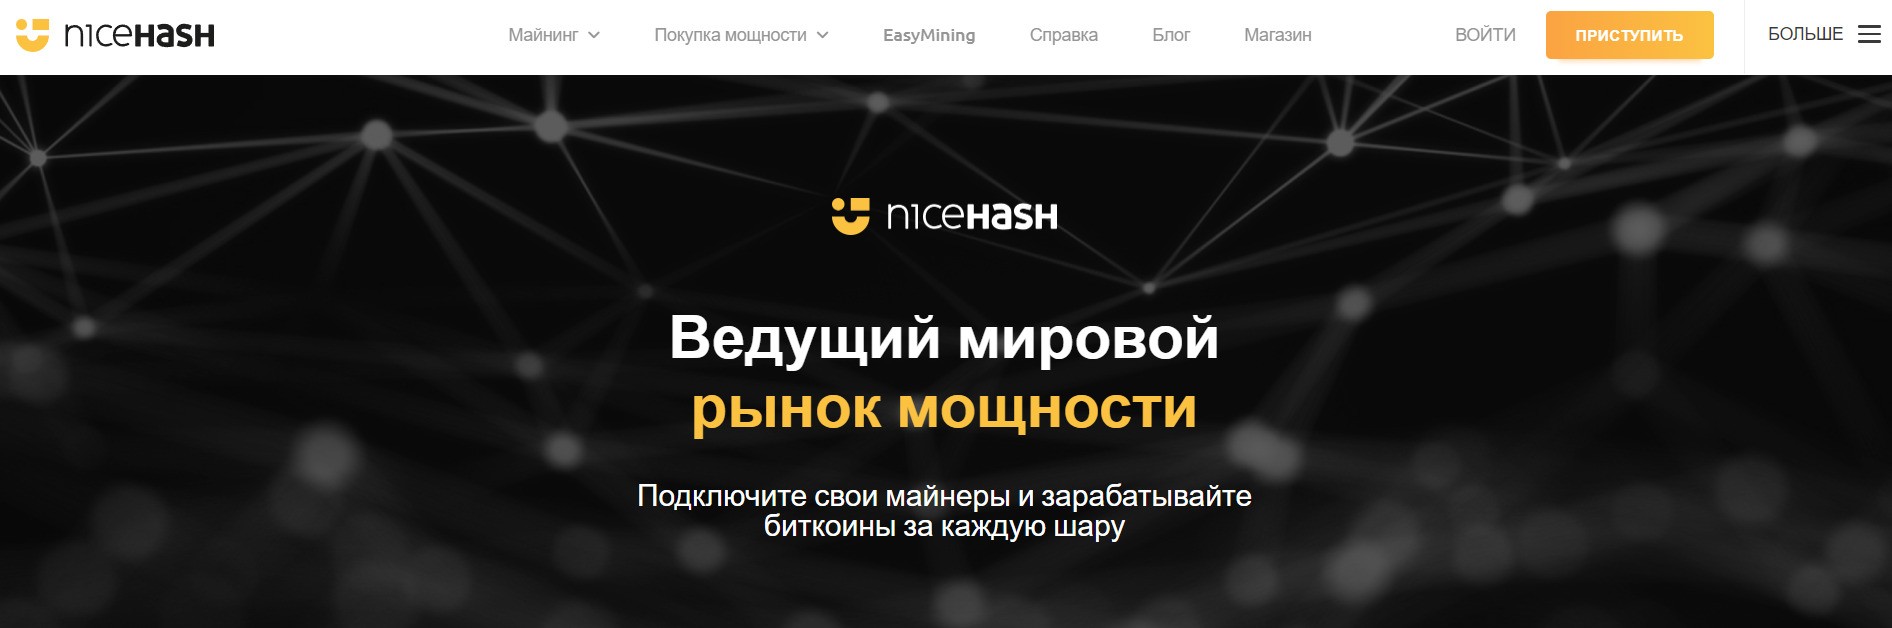 Nicehash Майнер сайт инвестиционной платформы